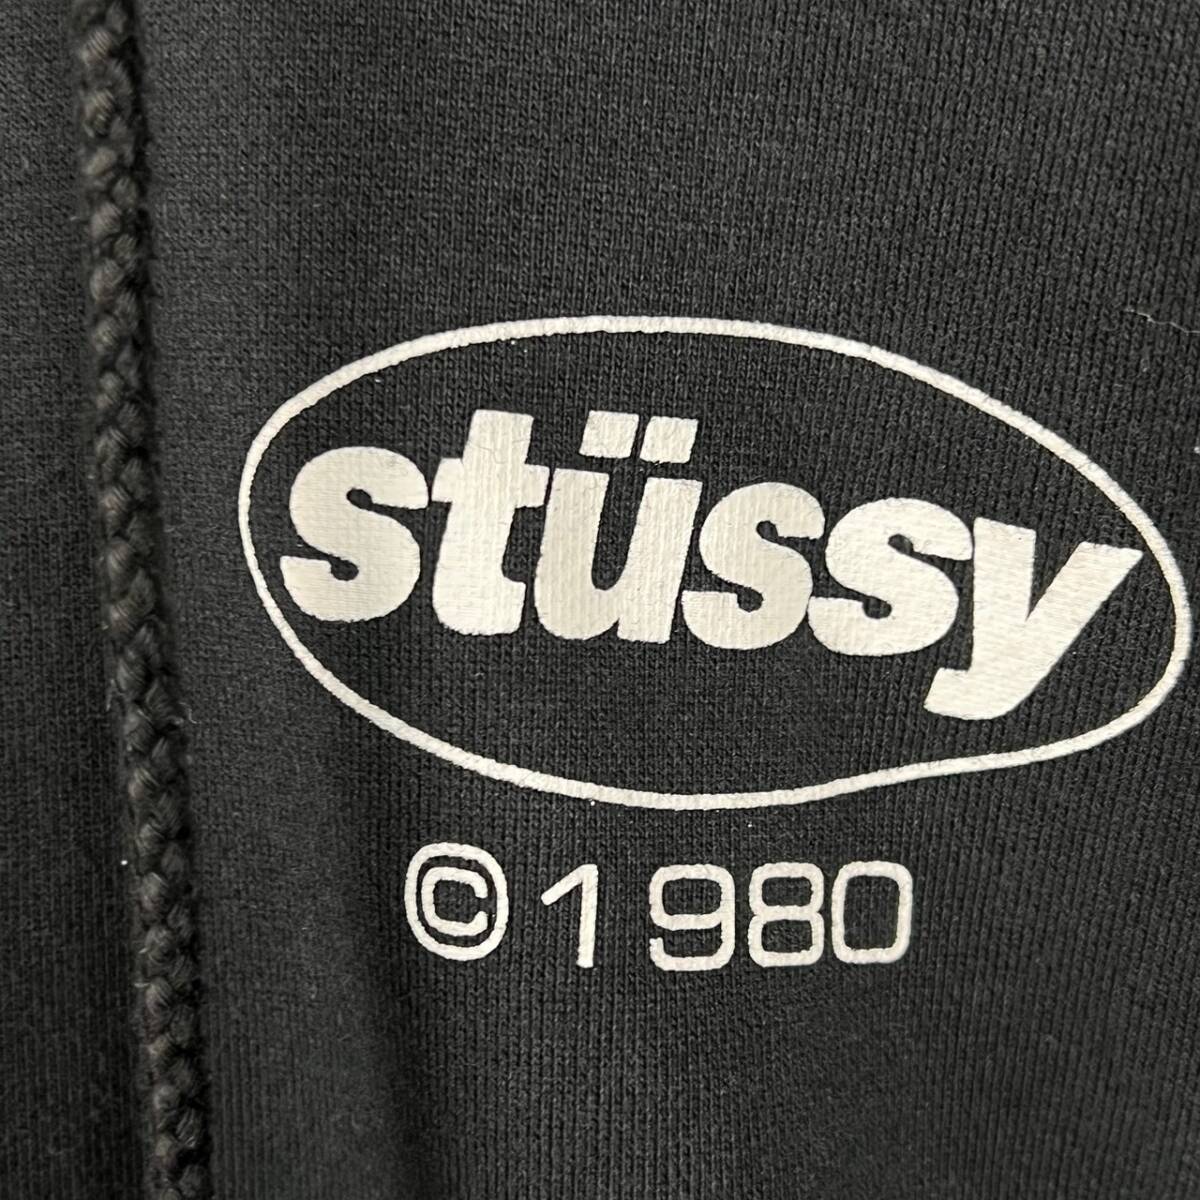 Wm504 STUSSY SOUL ステューシー スウェット パーカー フーディー プルオーバー ロゴプリント ブラック 黒 メンズ